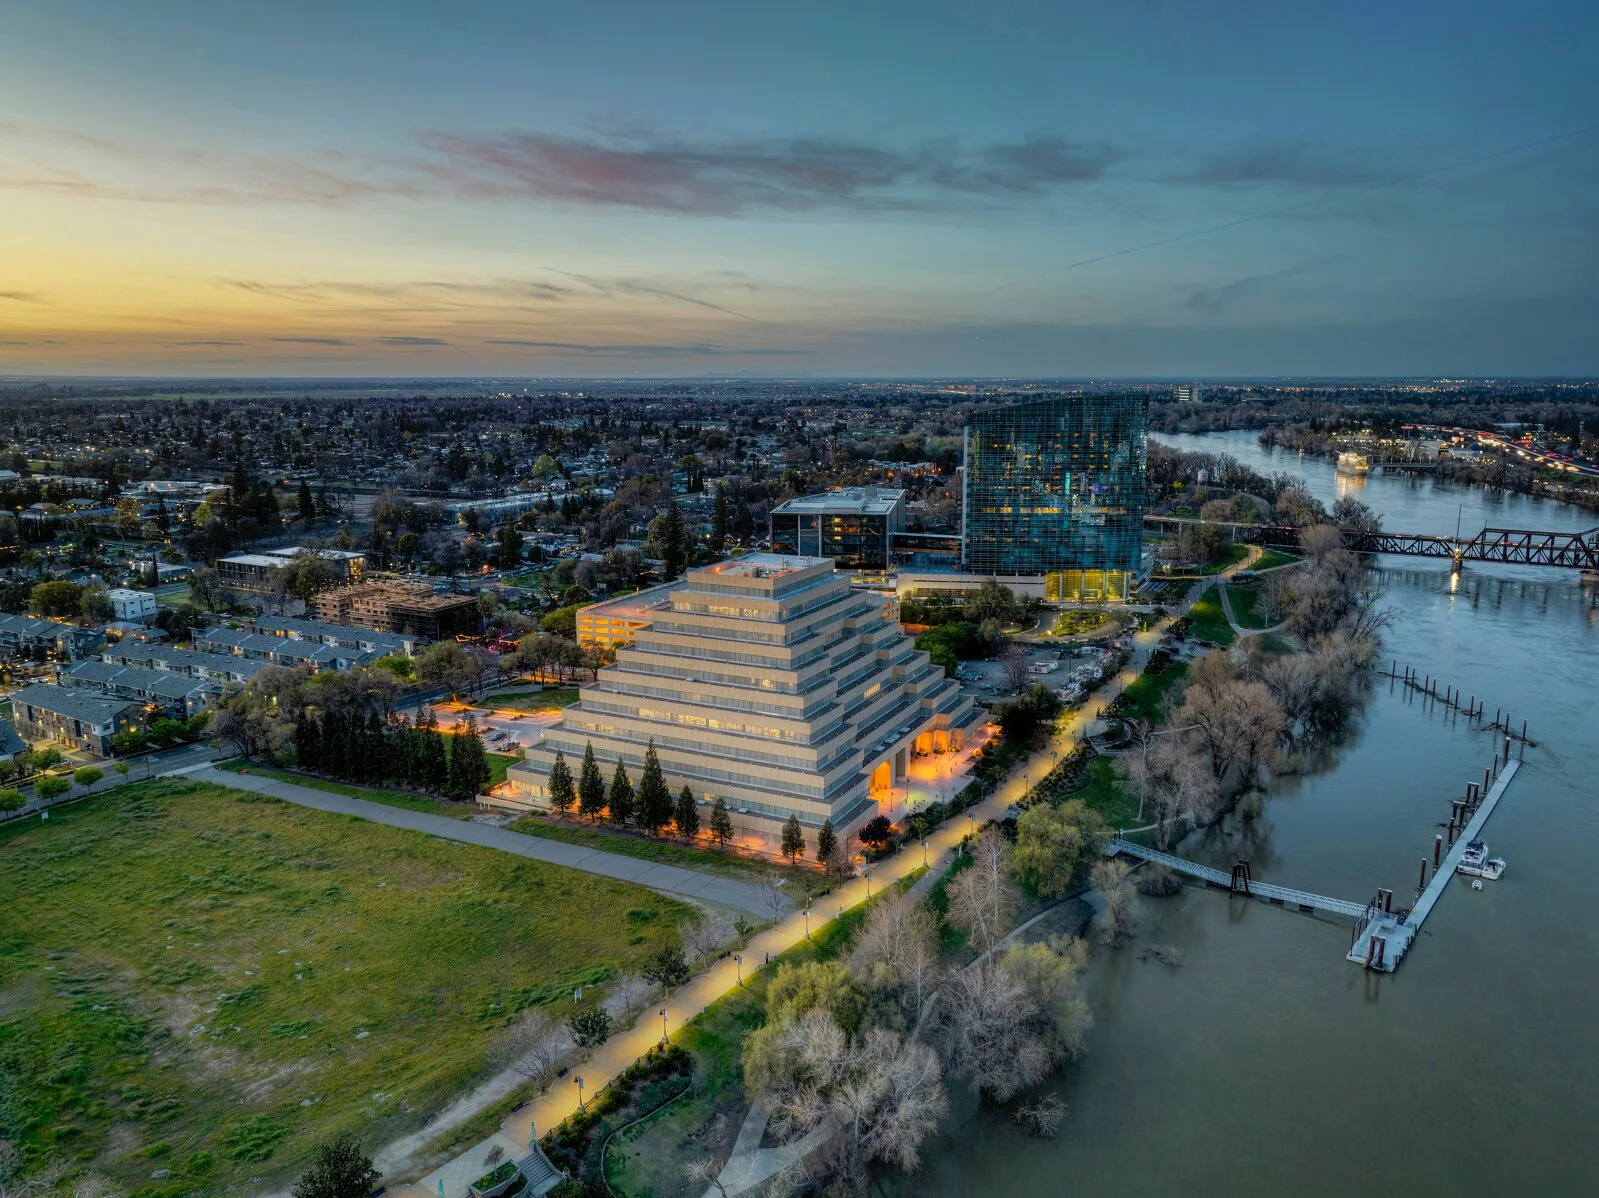 Photo of Sacramento pyramid, photo taken at dusk, pyramid adjacent to river.